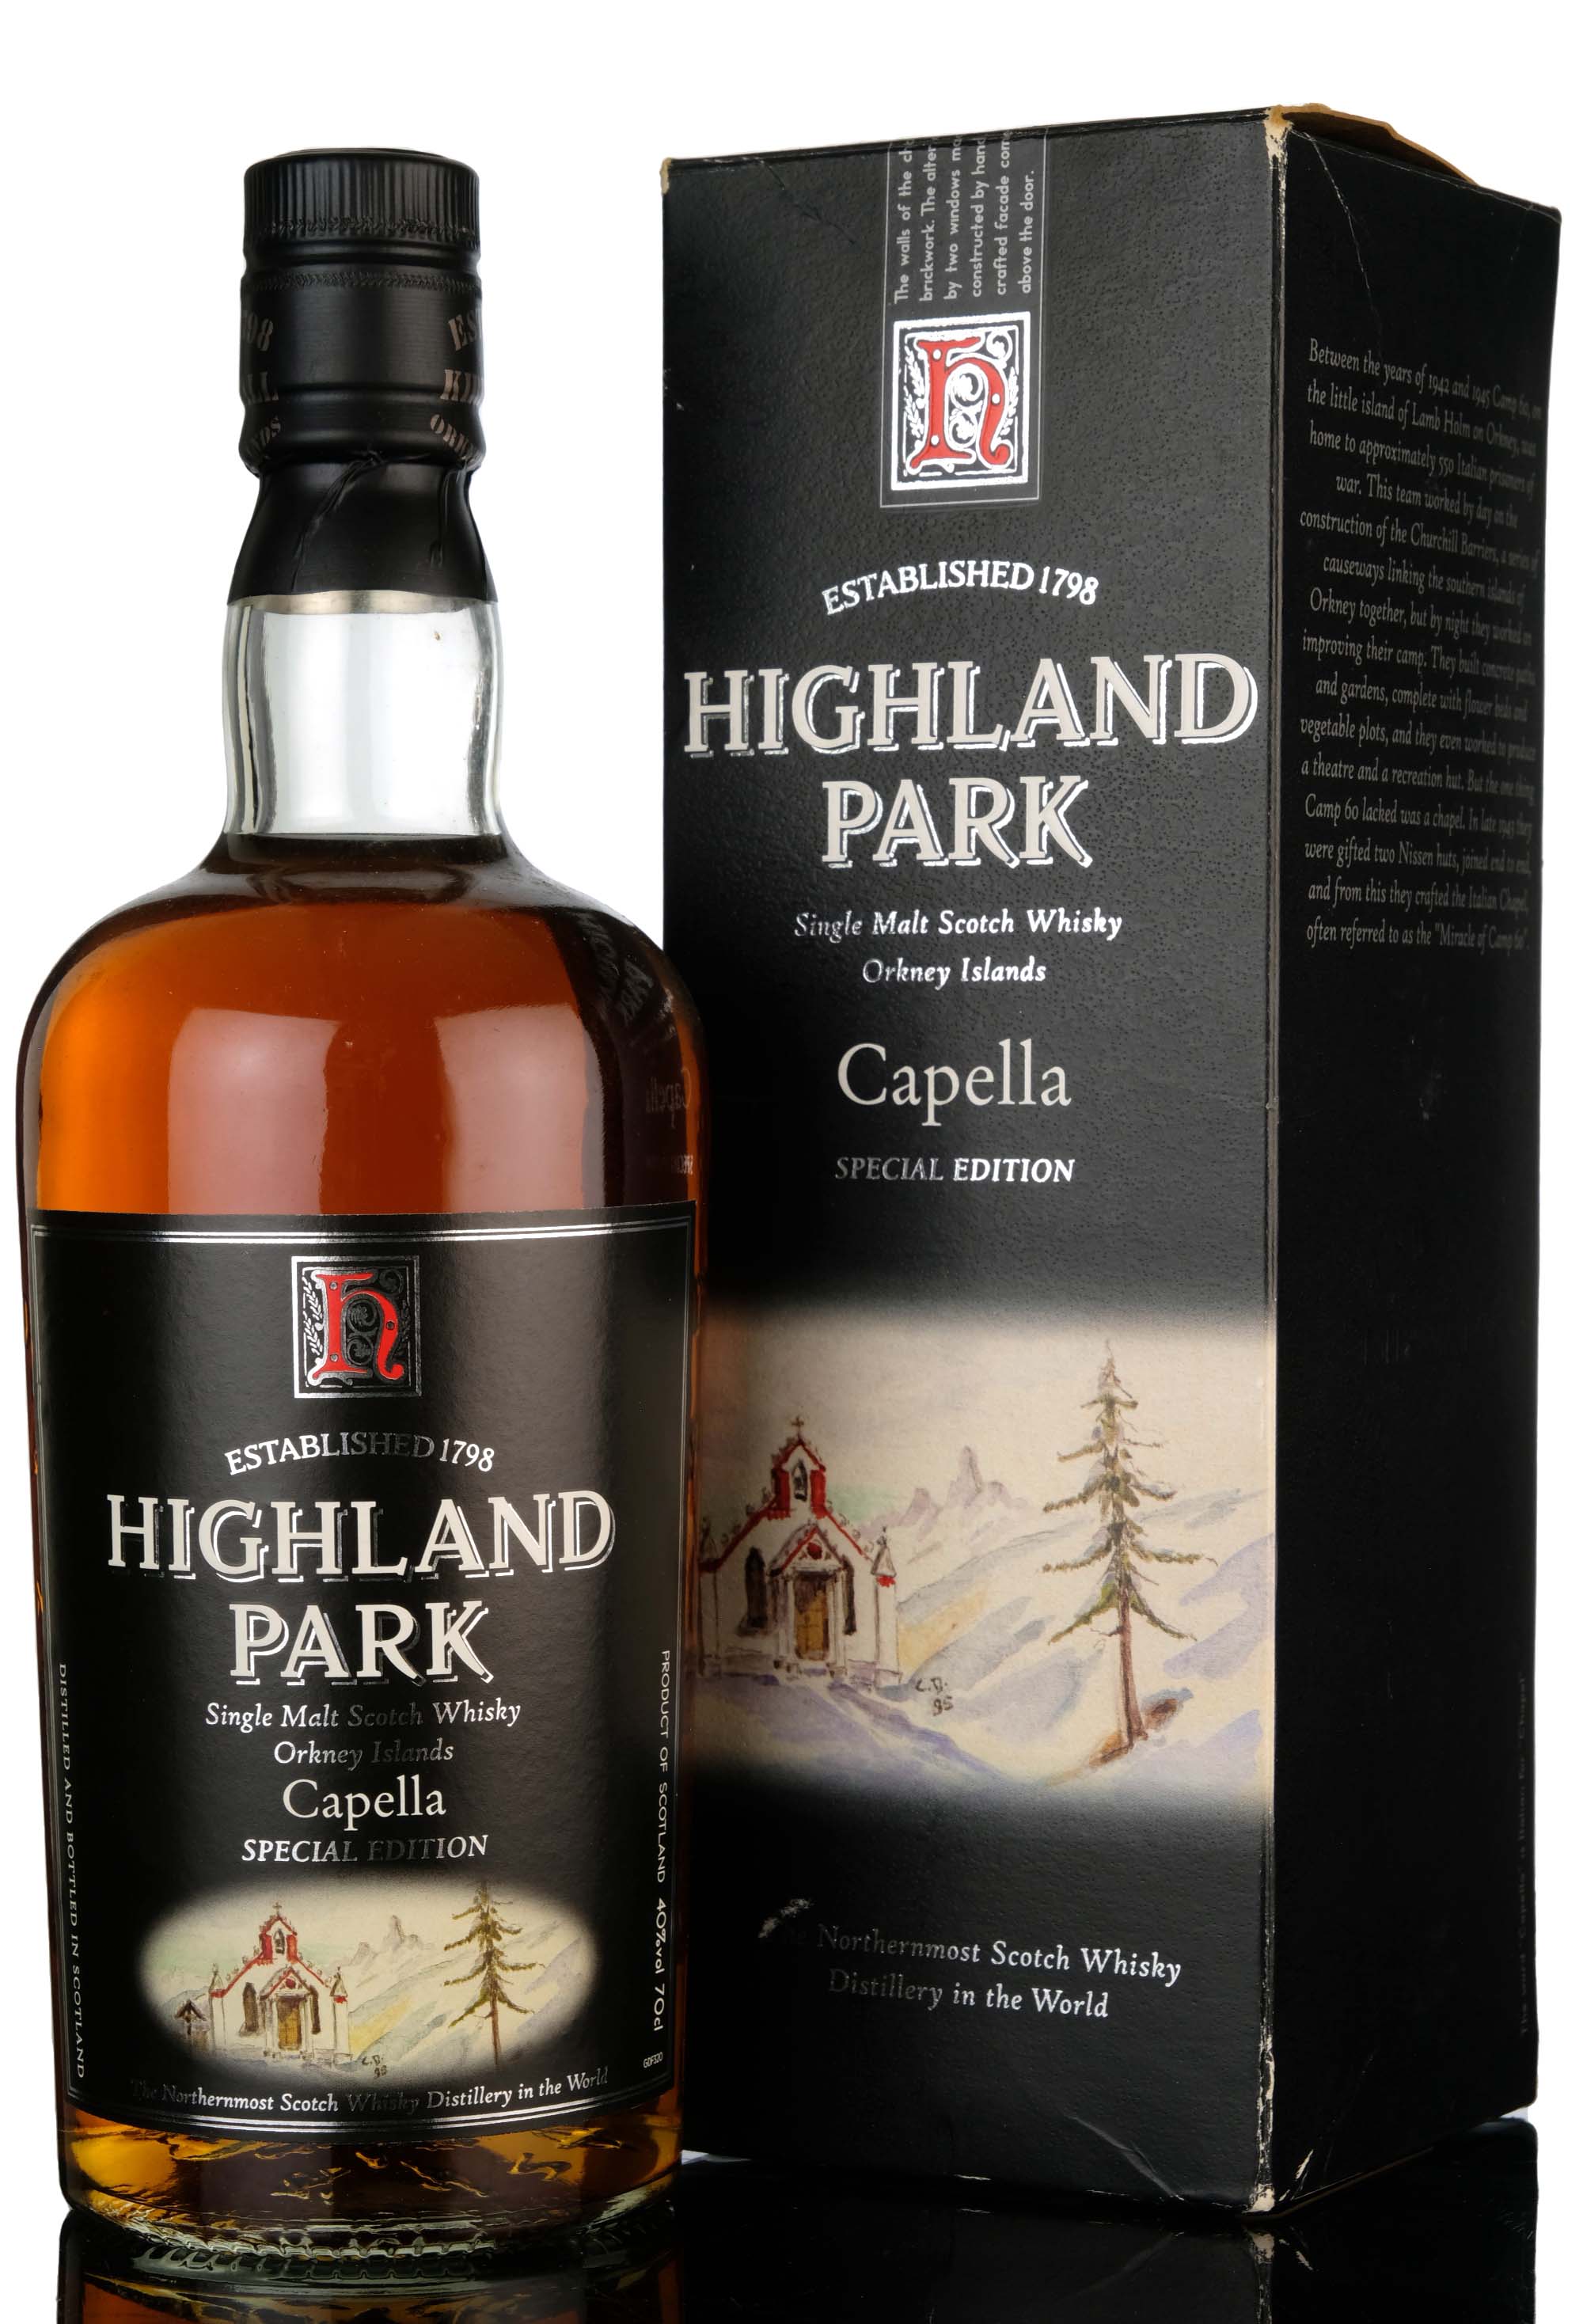 Highland Park Capella Special Edition - 2002 Release